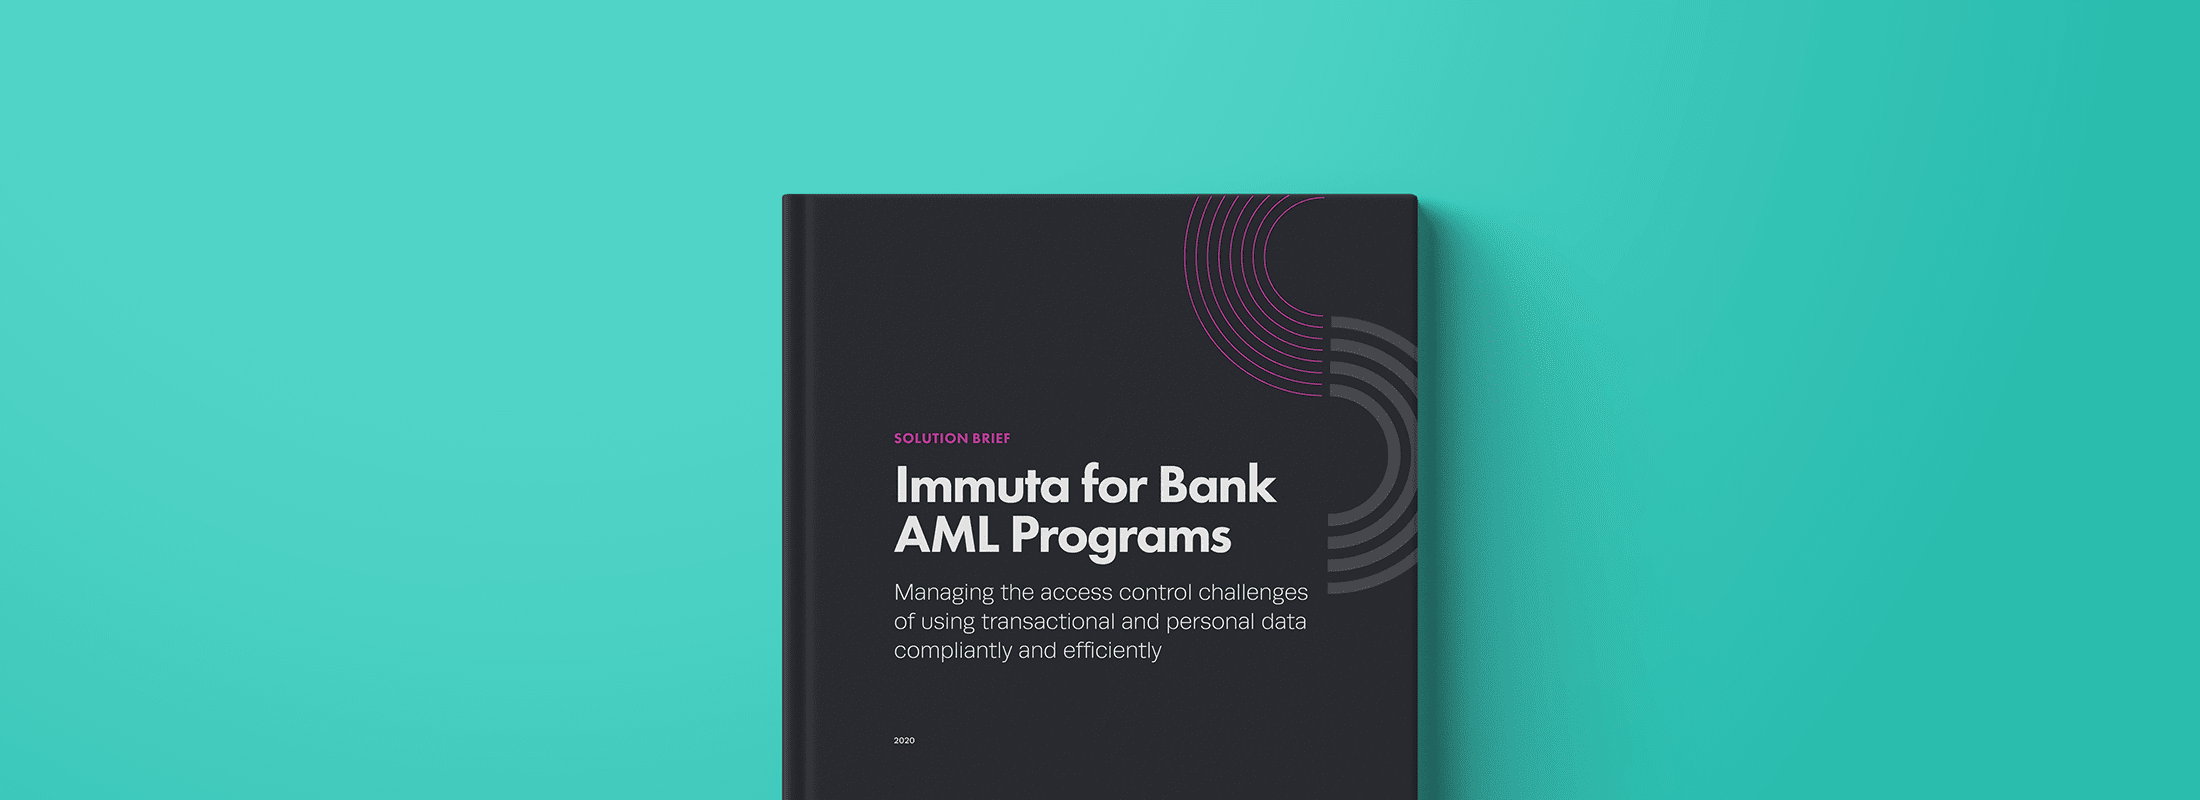 Immuta for Bank AML Programs